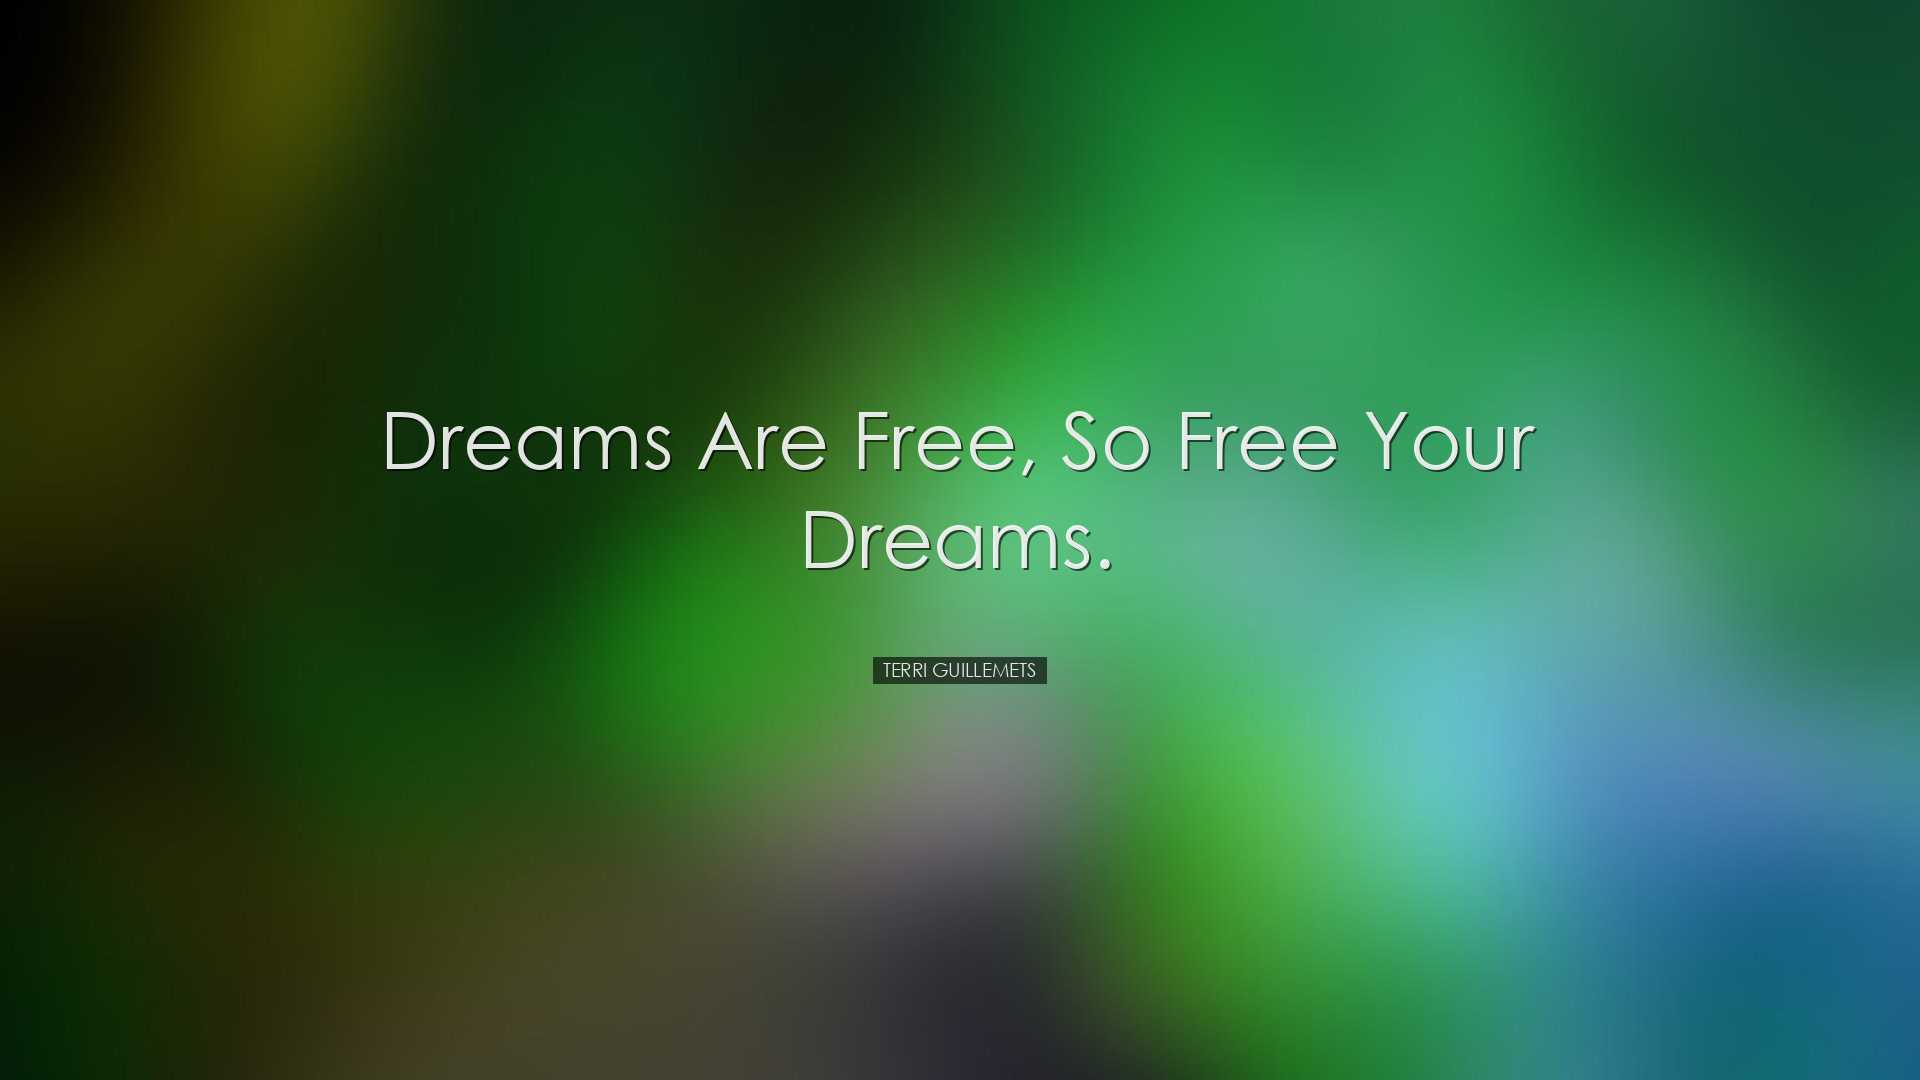 Dreams are free, so free your dreams. - Terri Guillemets